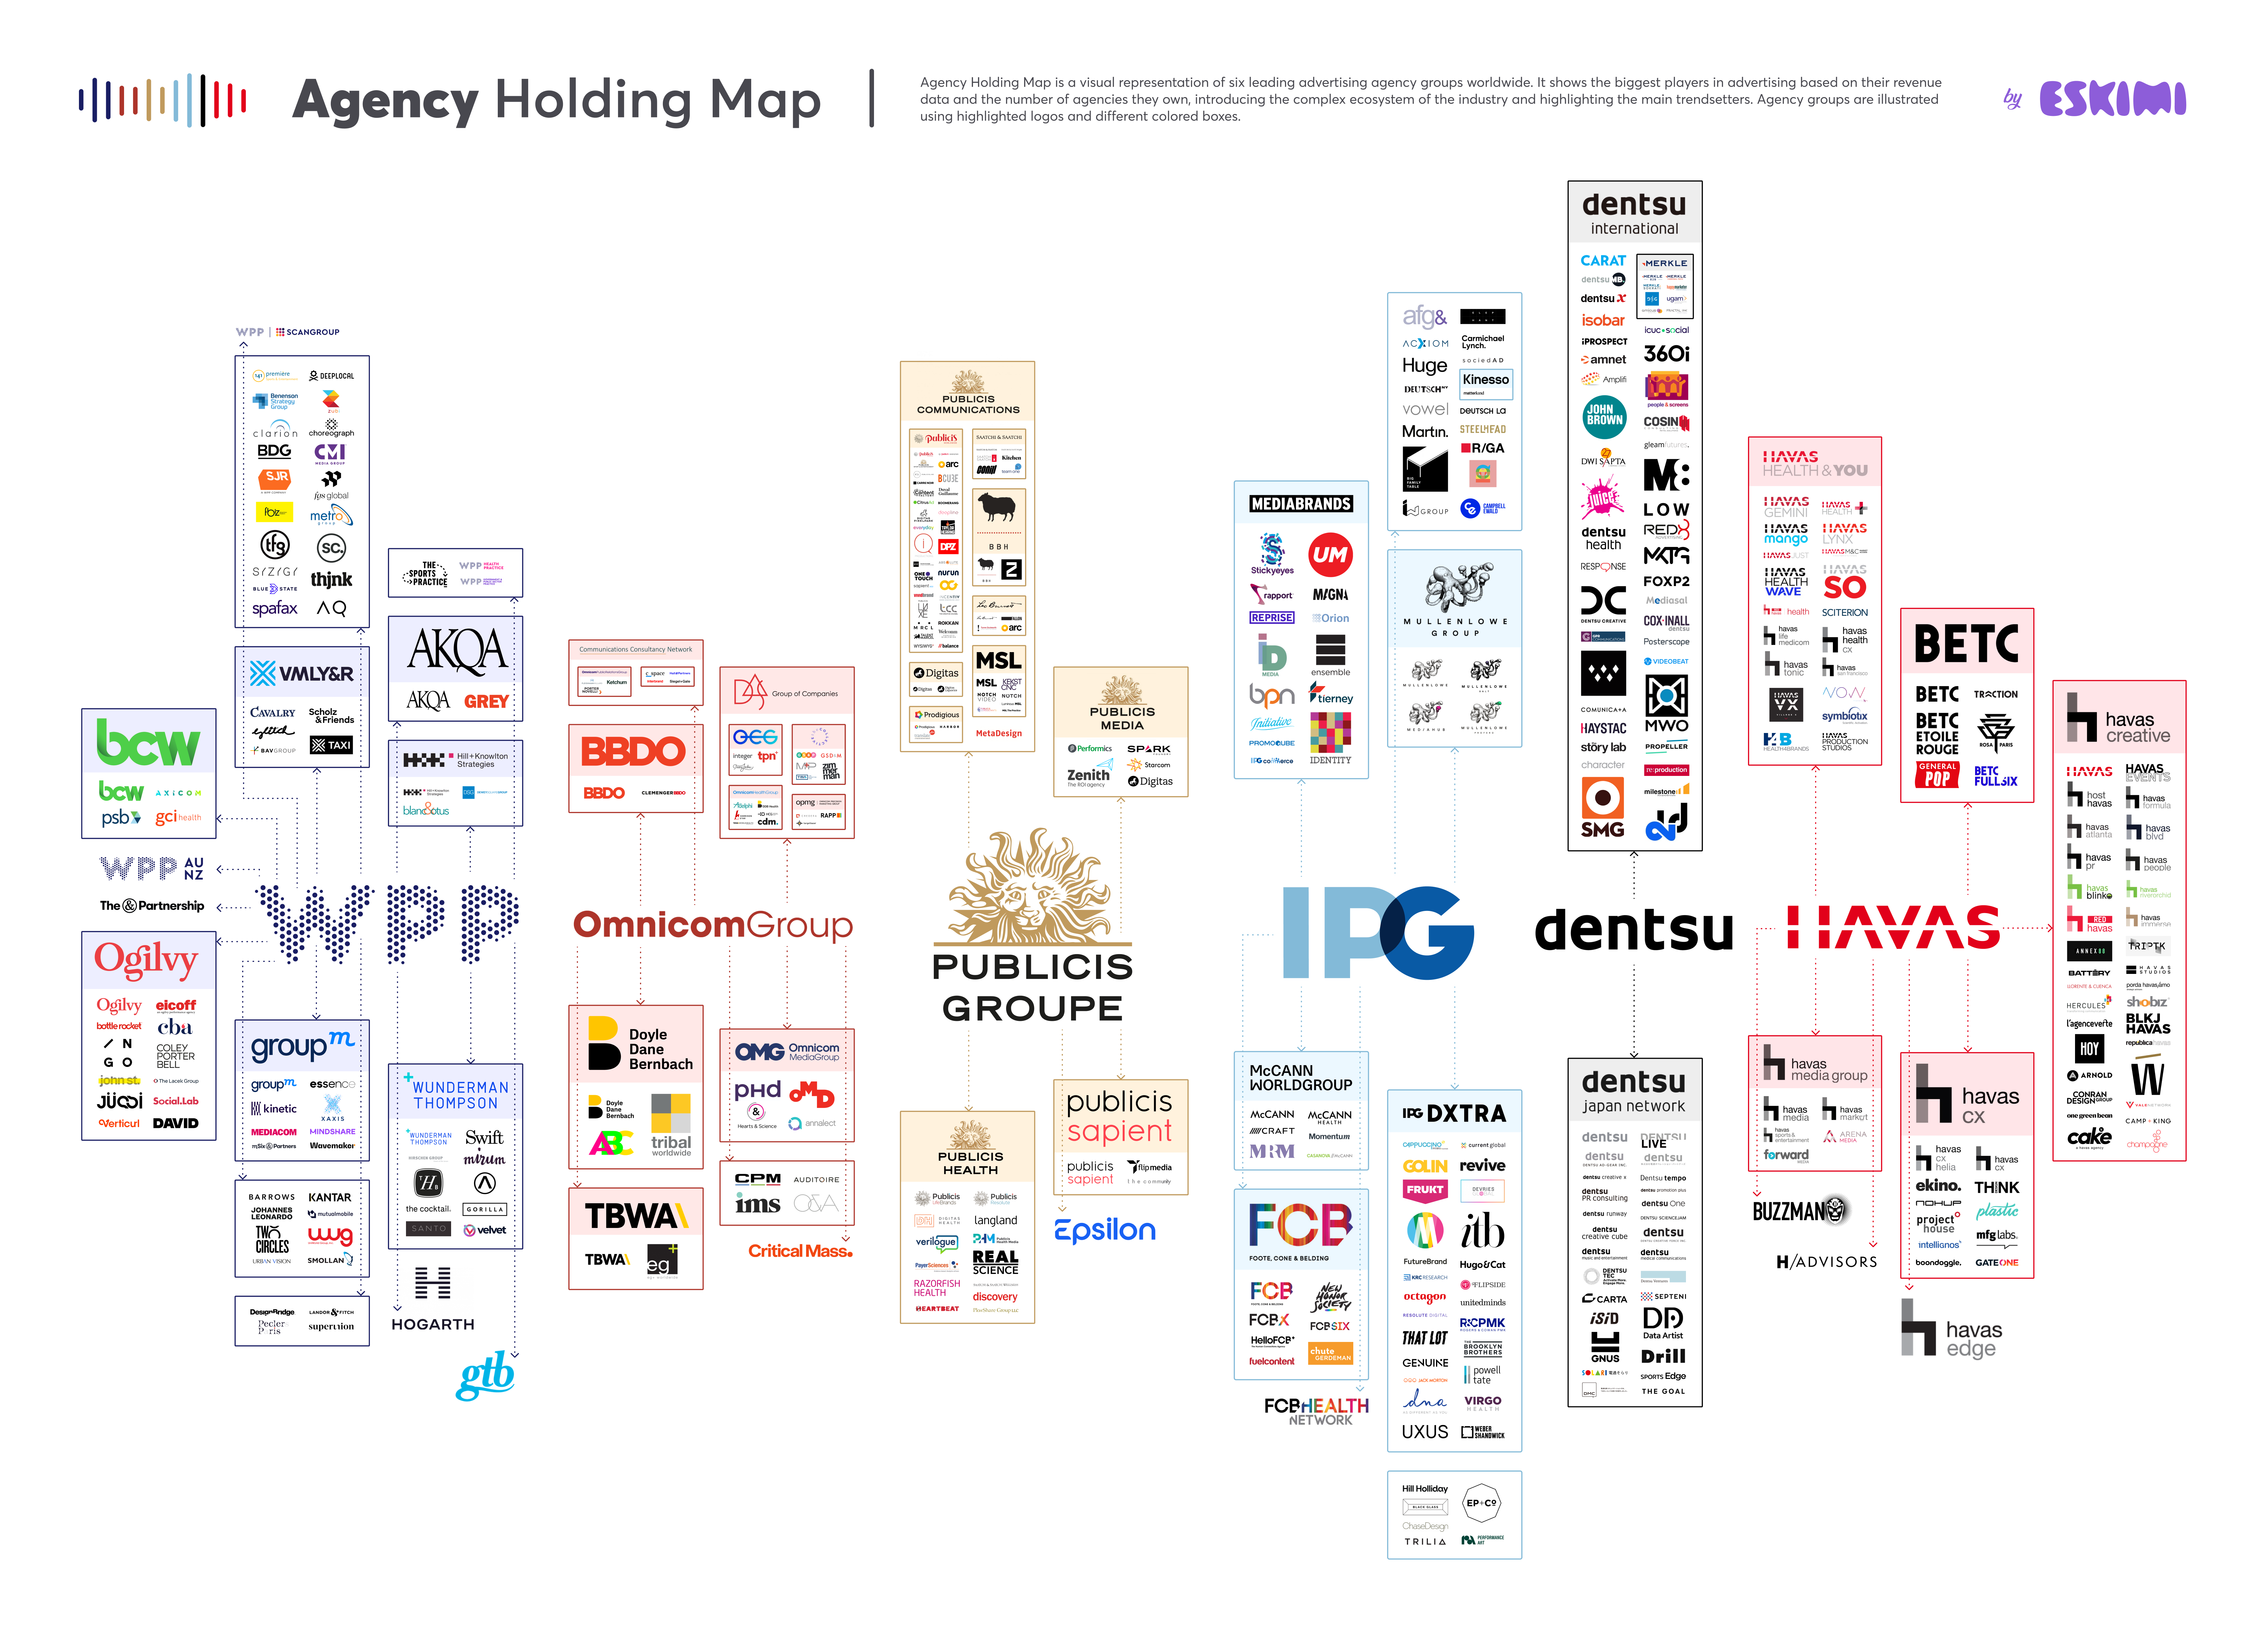 agency-holding-map-by-eskimi